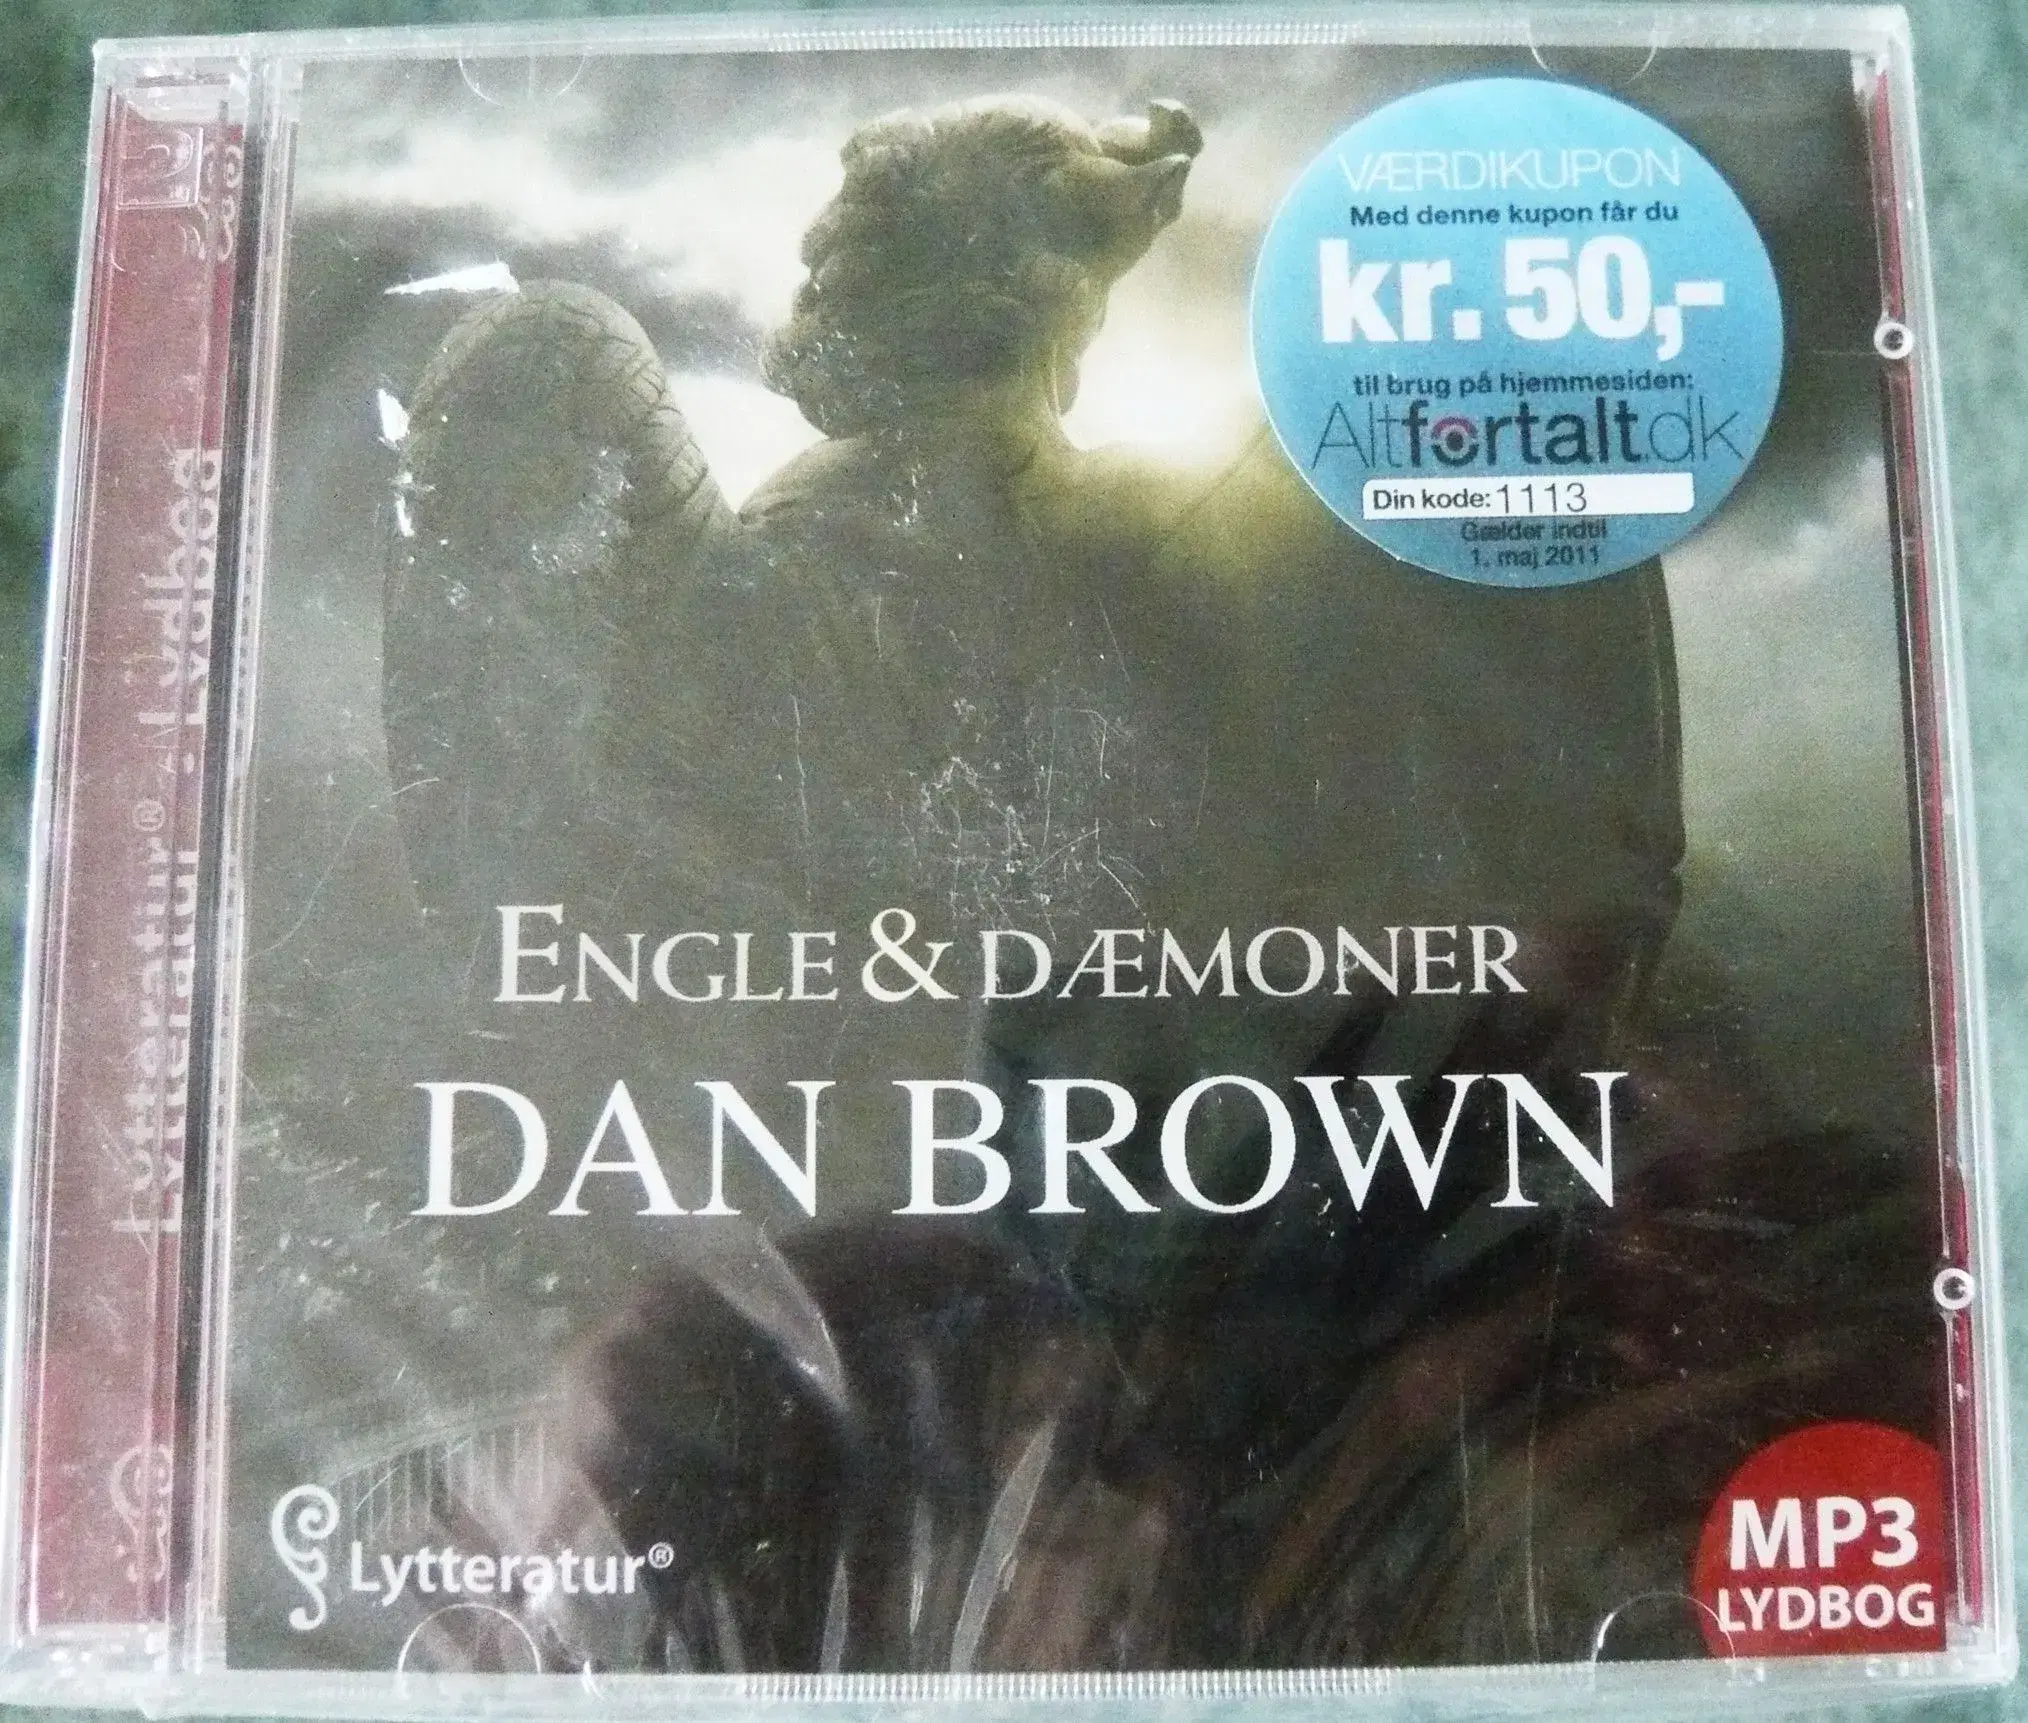 MP3 lydbøger af Dan Brown